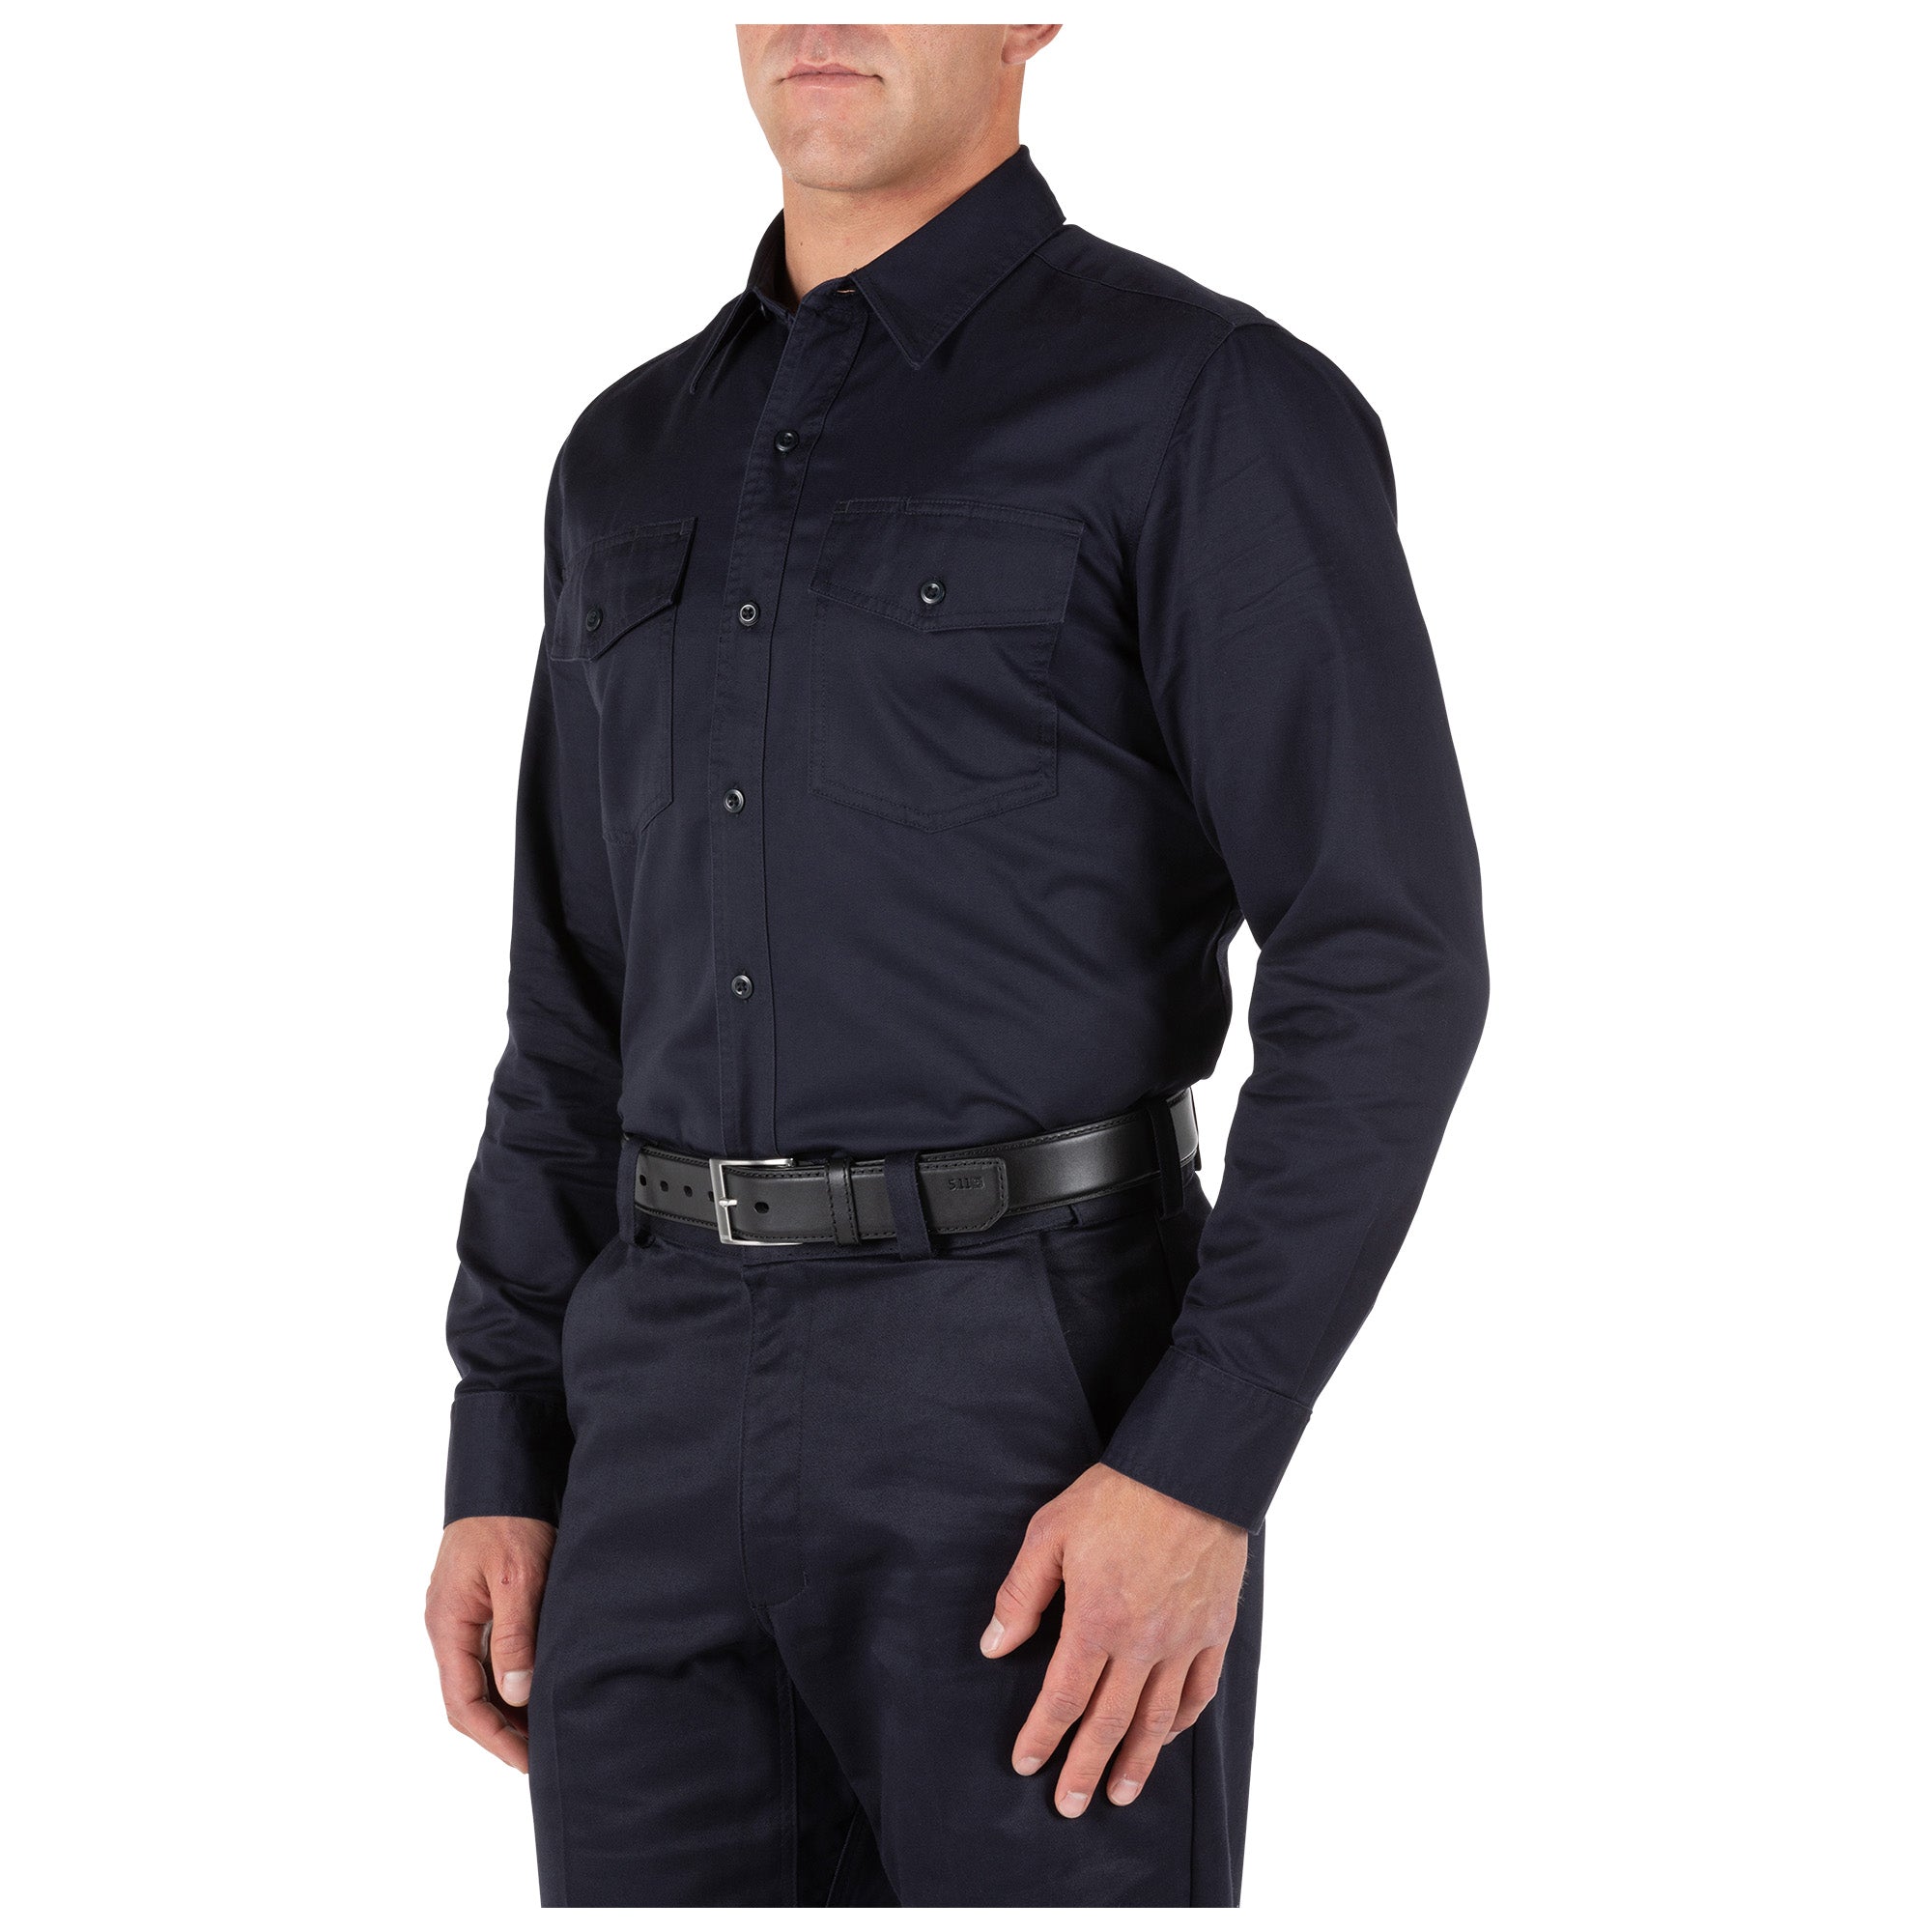 5.11 Tactical Company Long Sleeve Shirt Fire Navy Outerwear 5.11 Tactical Tactical Gear Supplier Tactical Distributors Australia